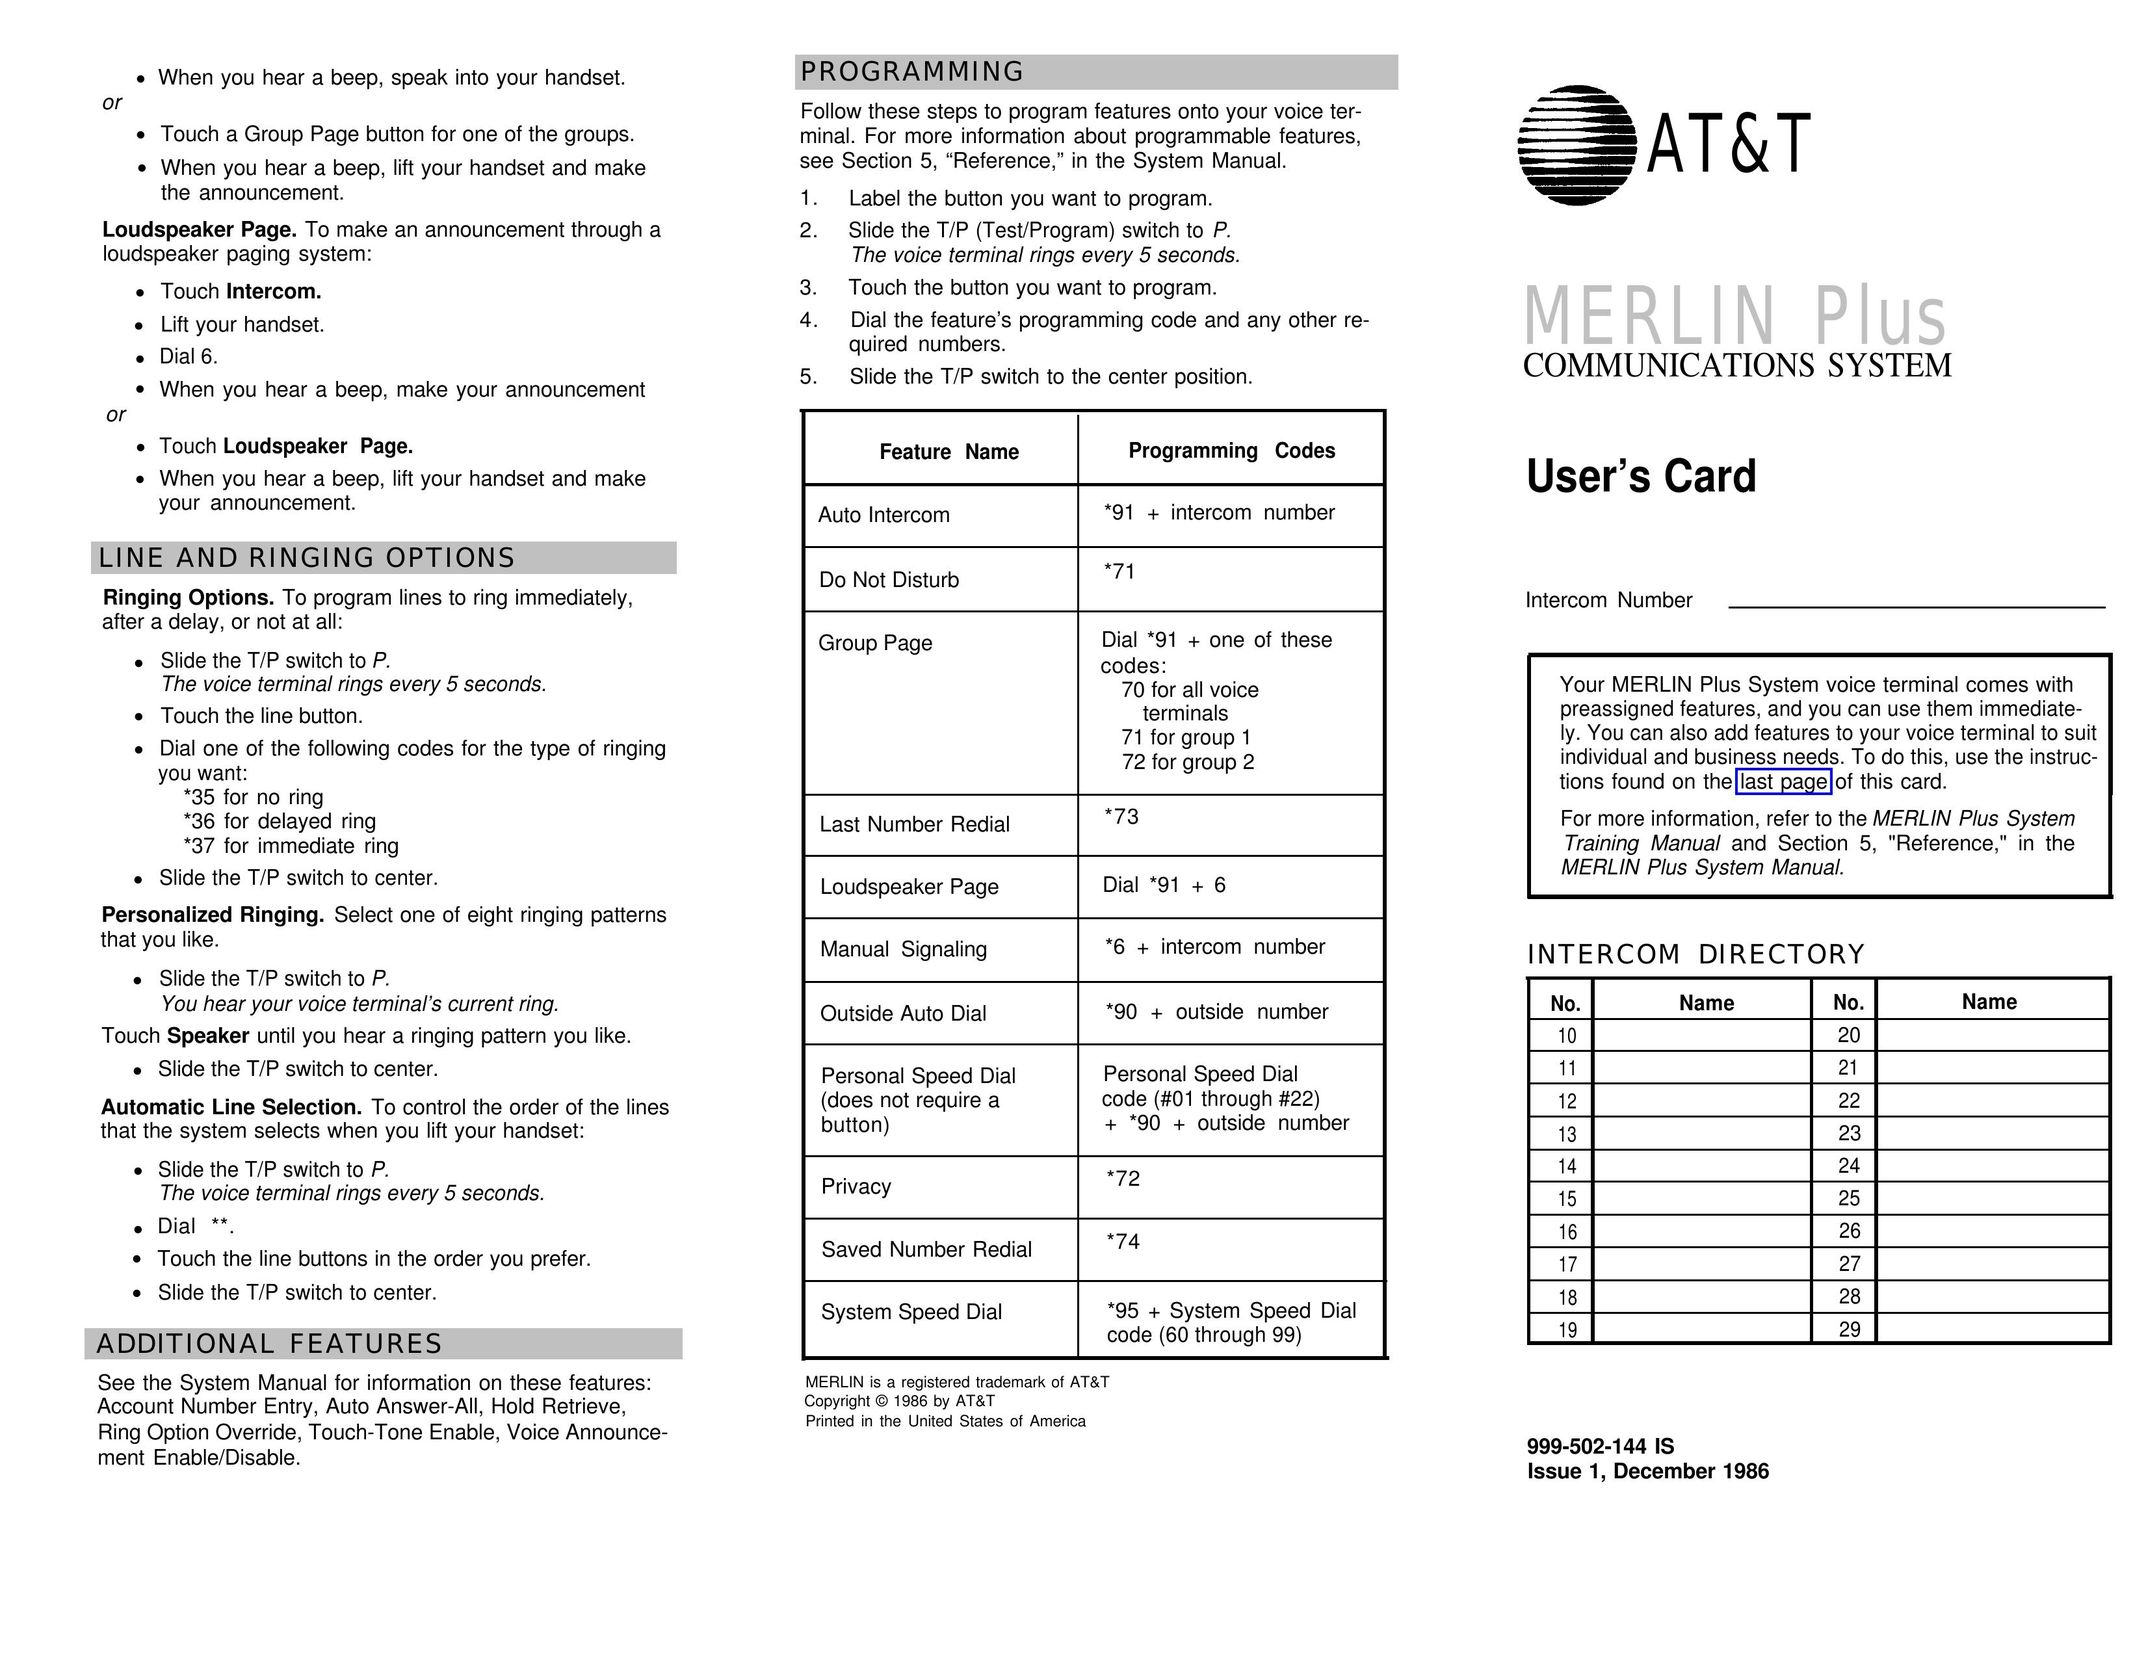 AT&T merlin plus communications system Intercom System User Manual